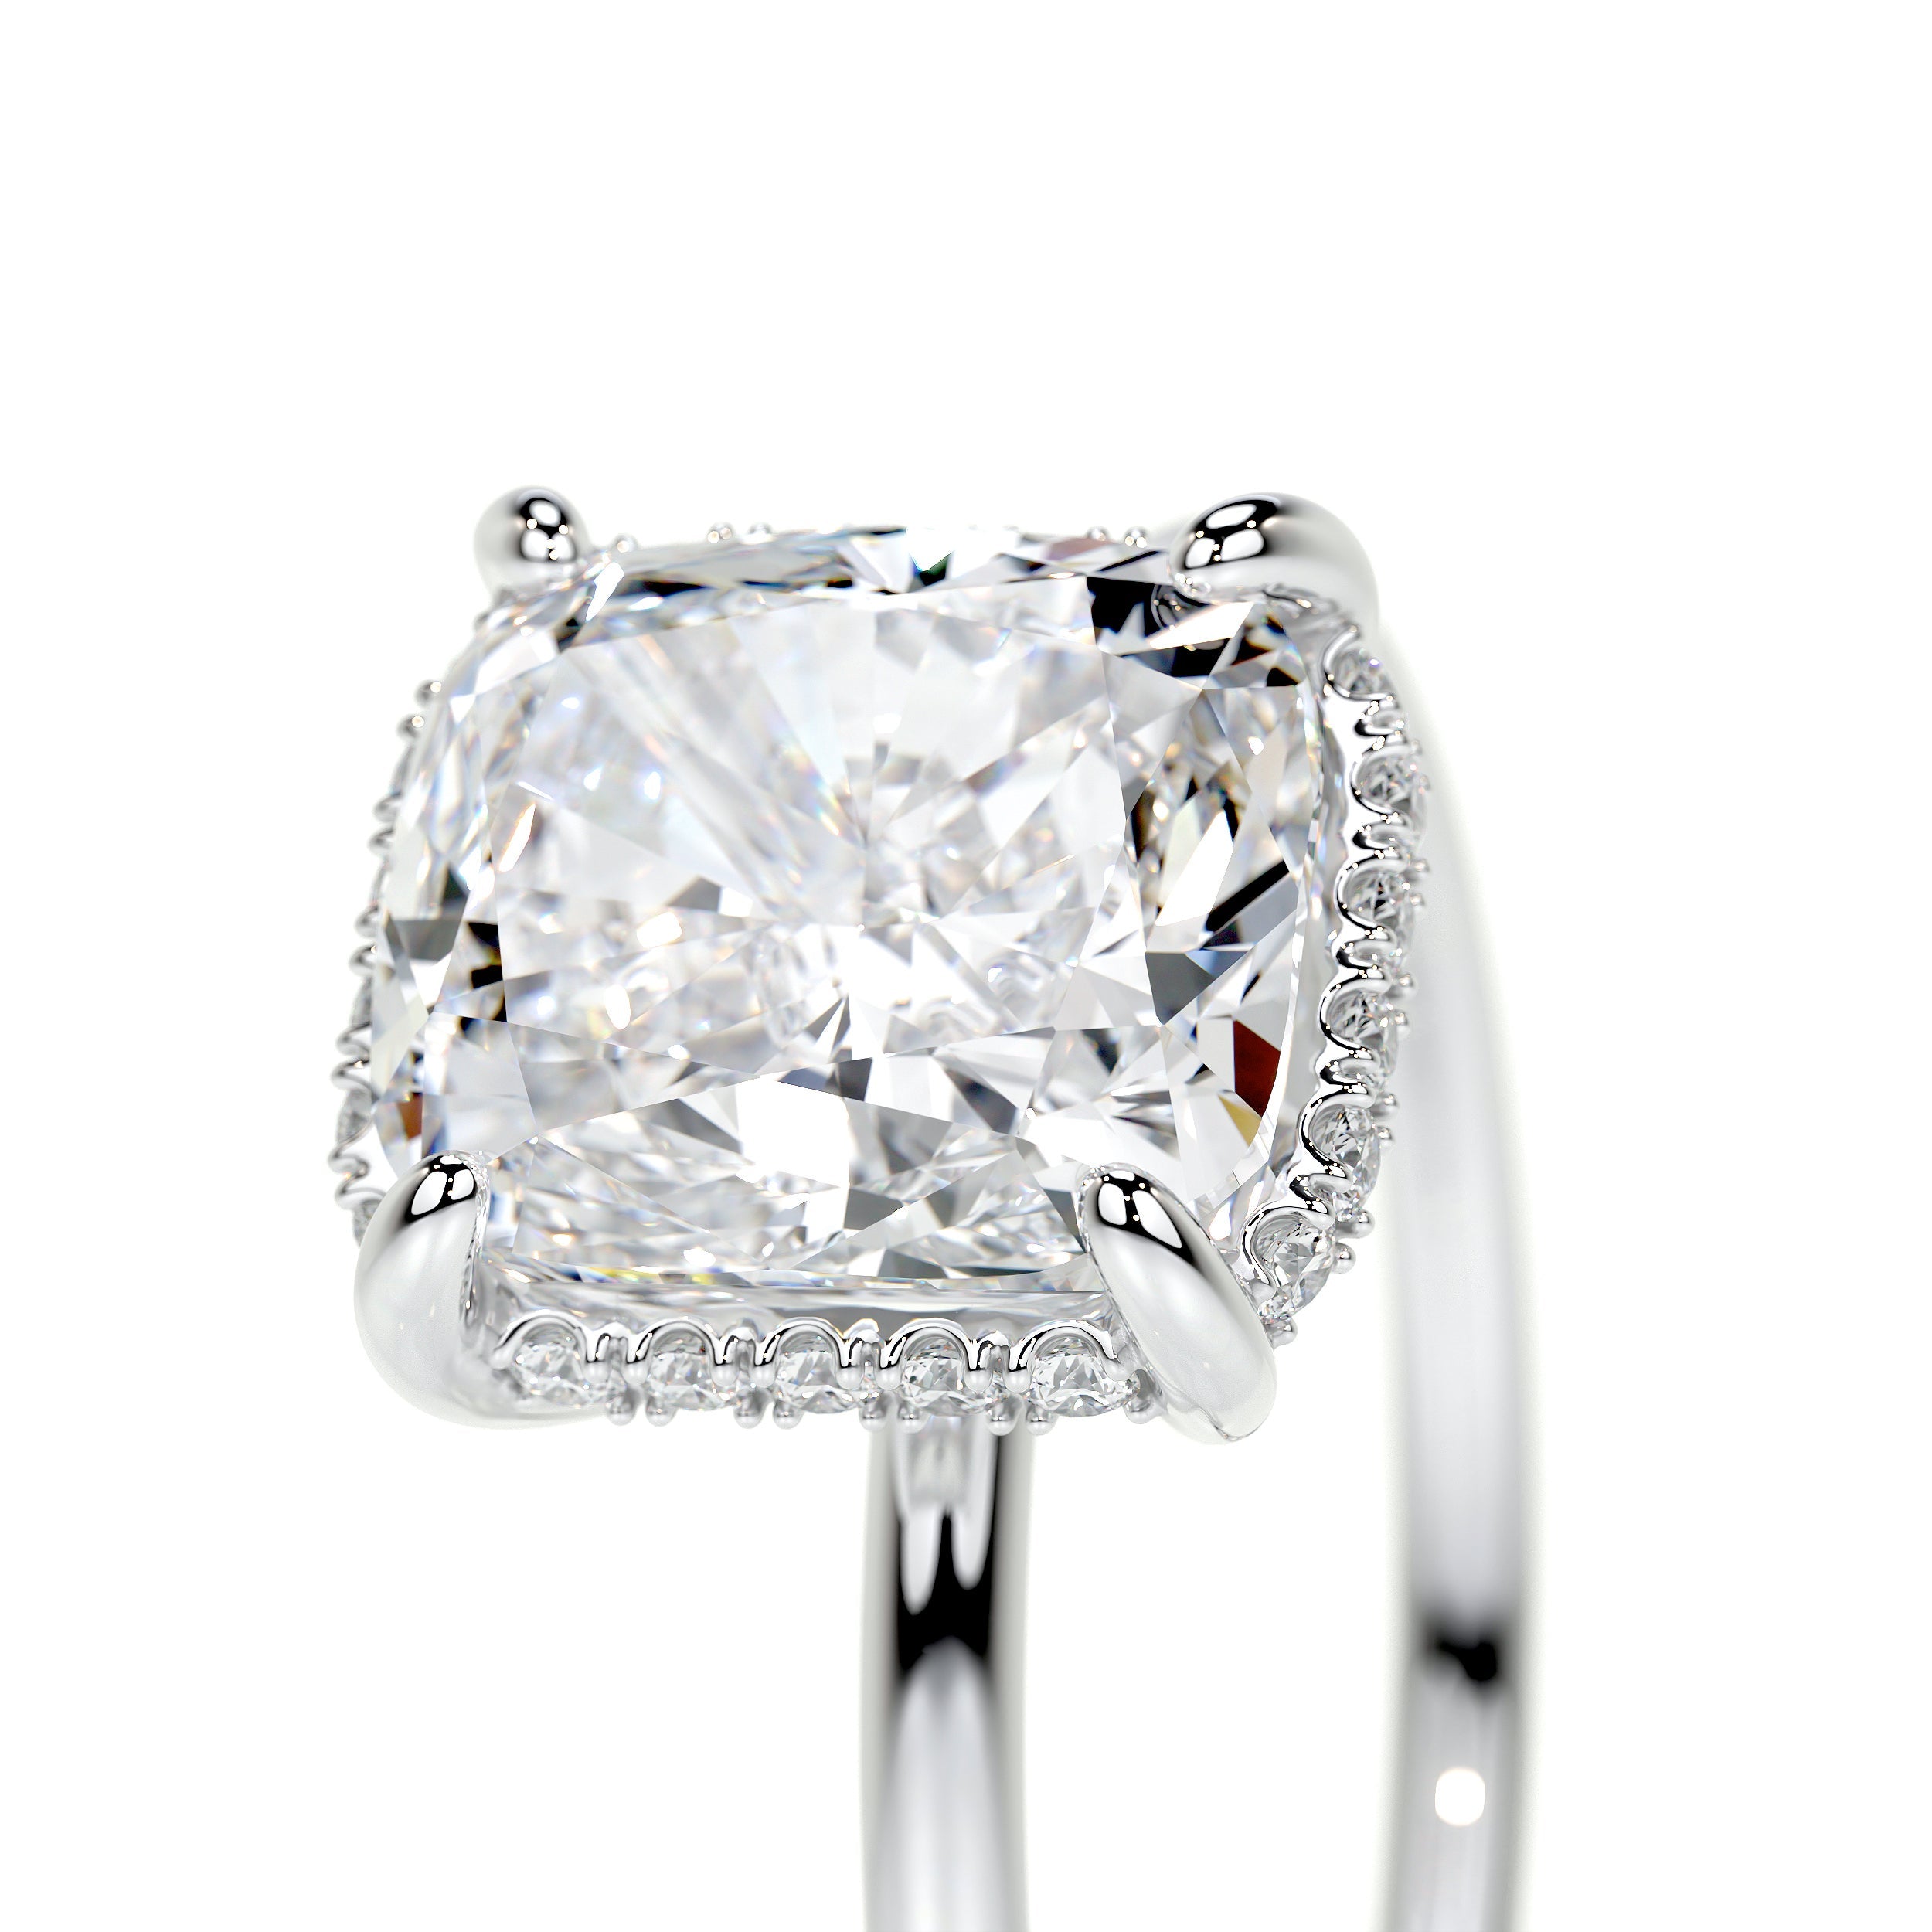 Priscilla Lab Grown Diamond Ring   (3.1 Carat) -14K White Gold